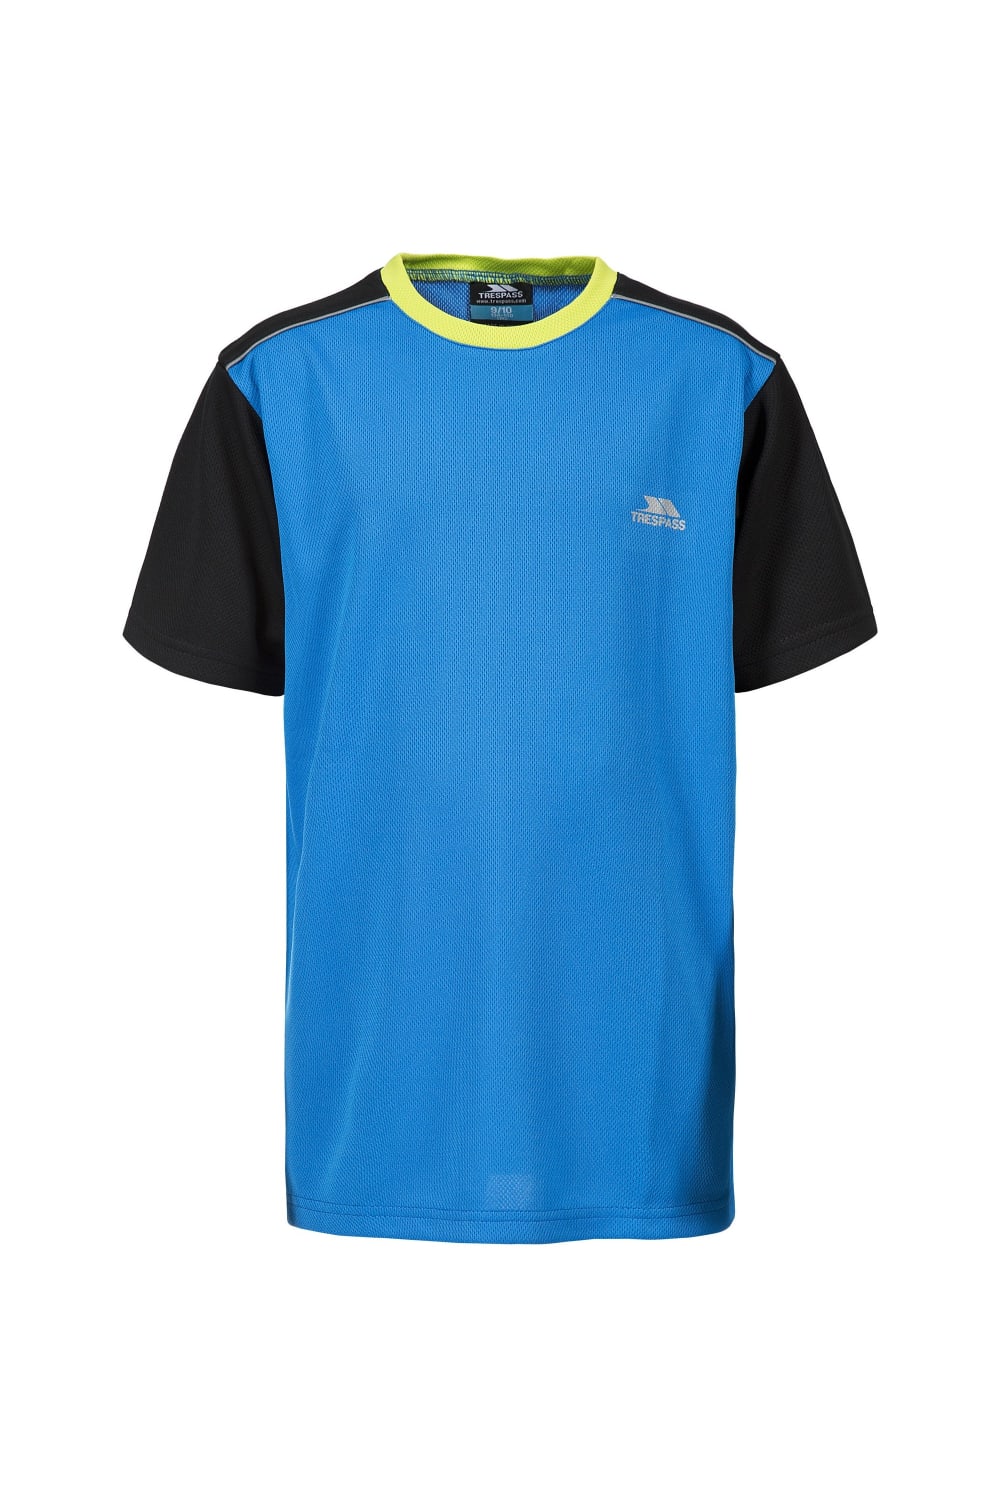 Trespass Childrens Boys Overlap Short Sleeve Active T-Shirt (Cobalt)